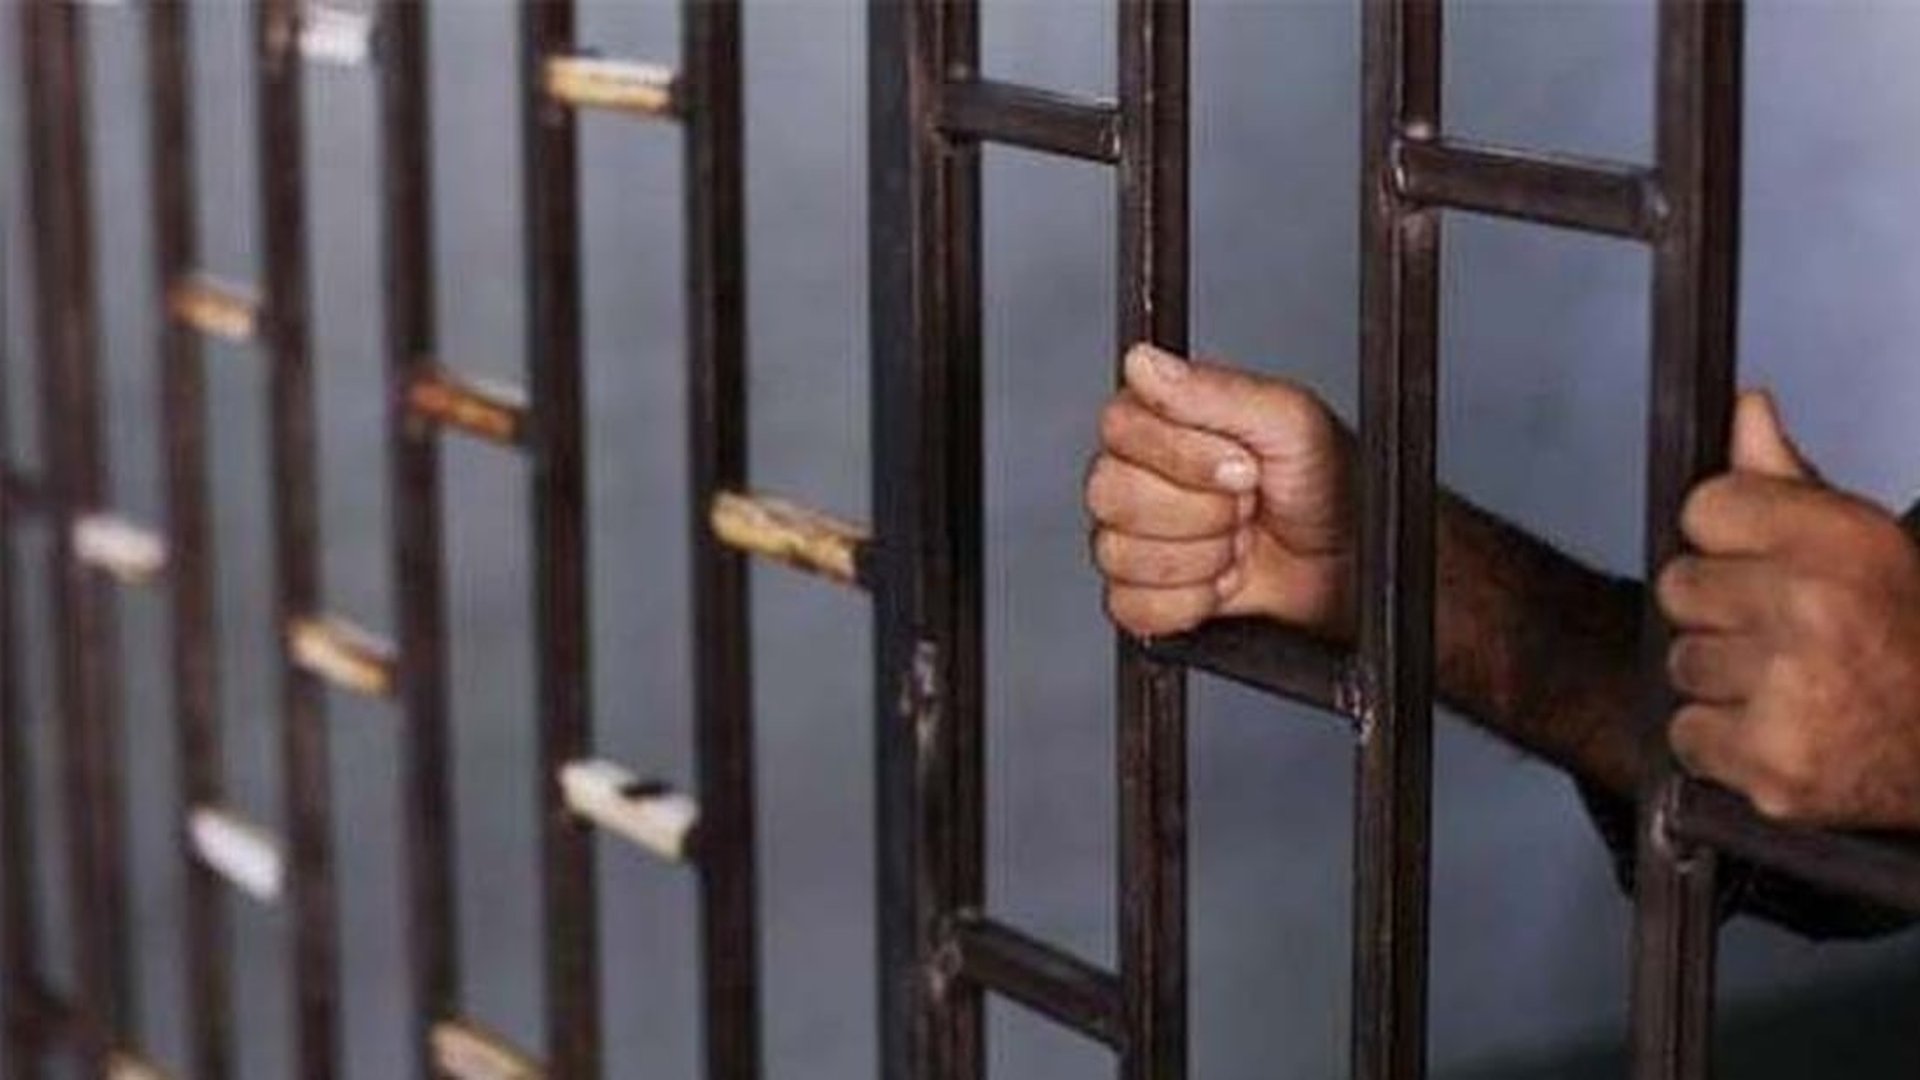 Iraqi criminal court sentences defendant to life in prison for ISIS affiliation